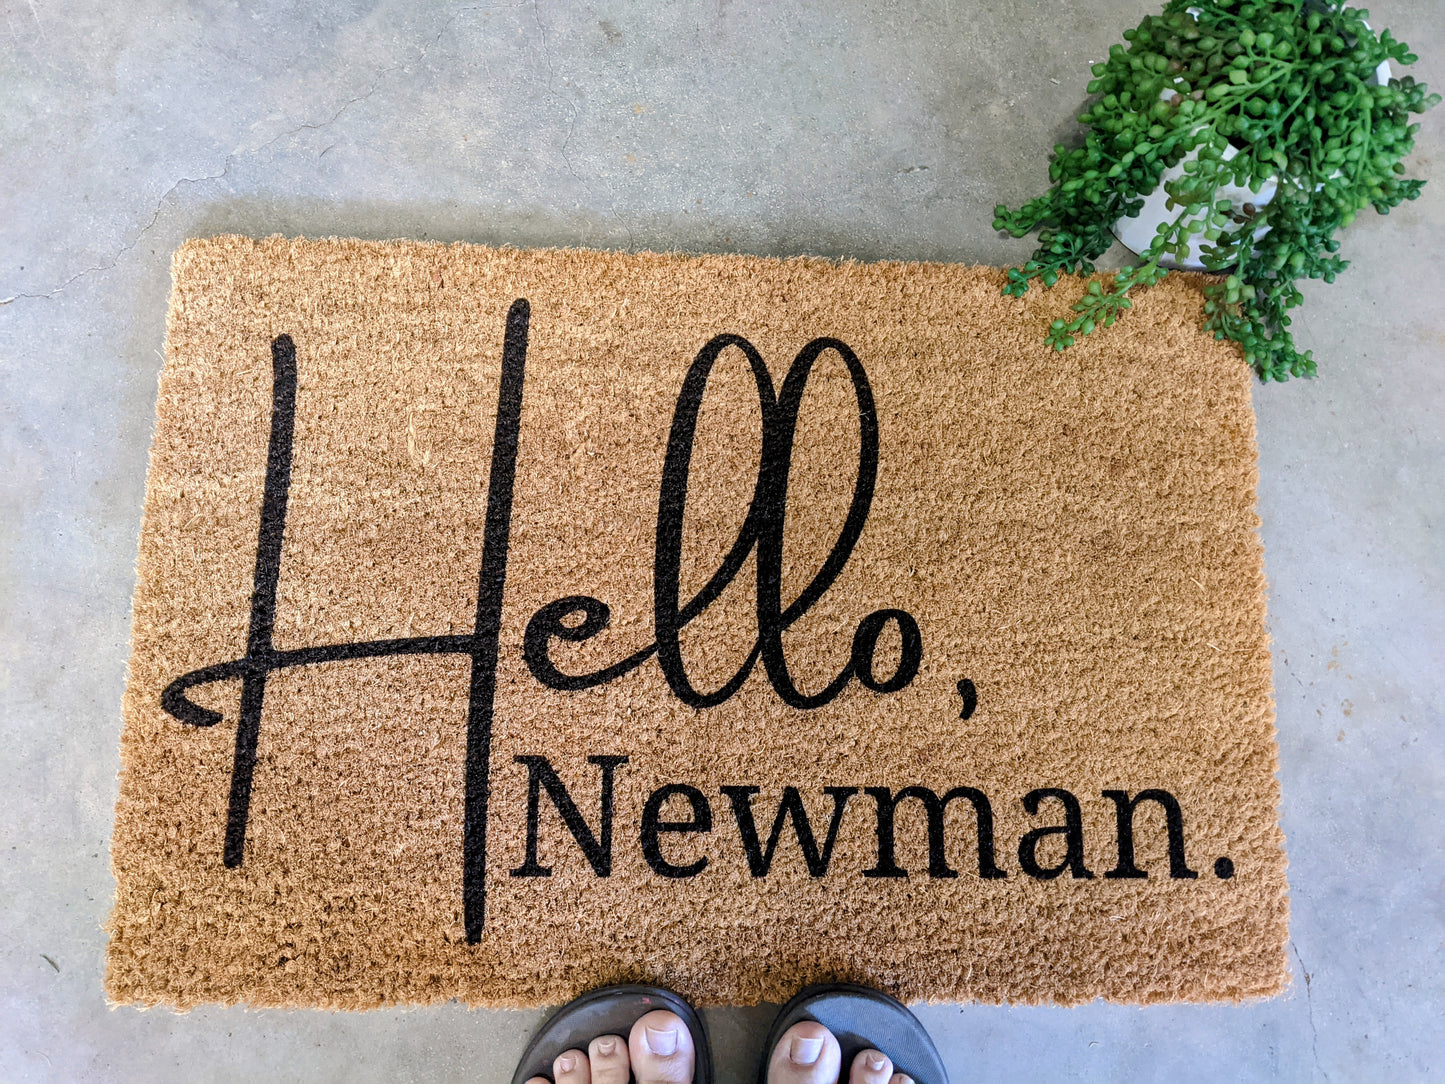 Seinfeld hello newman funny doormat